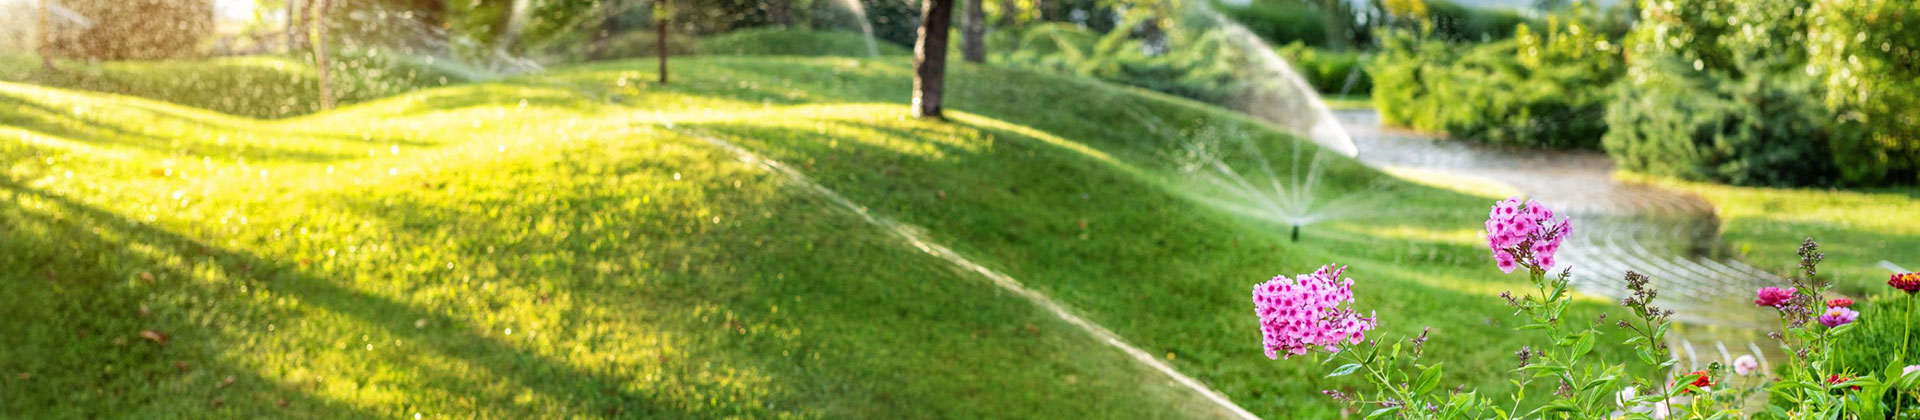 Sprinklers Irrigate Landscaping in a Park